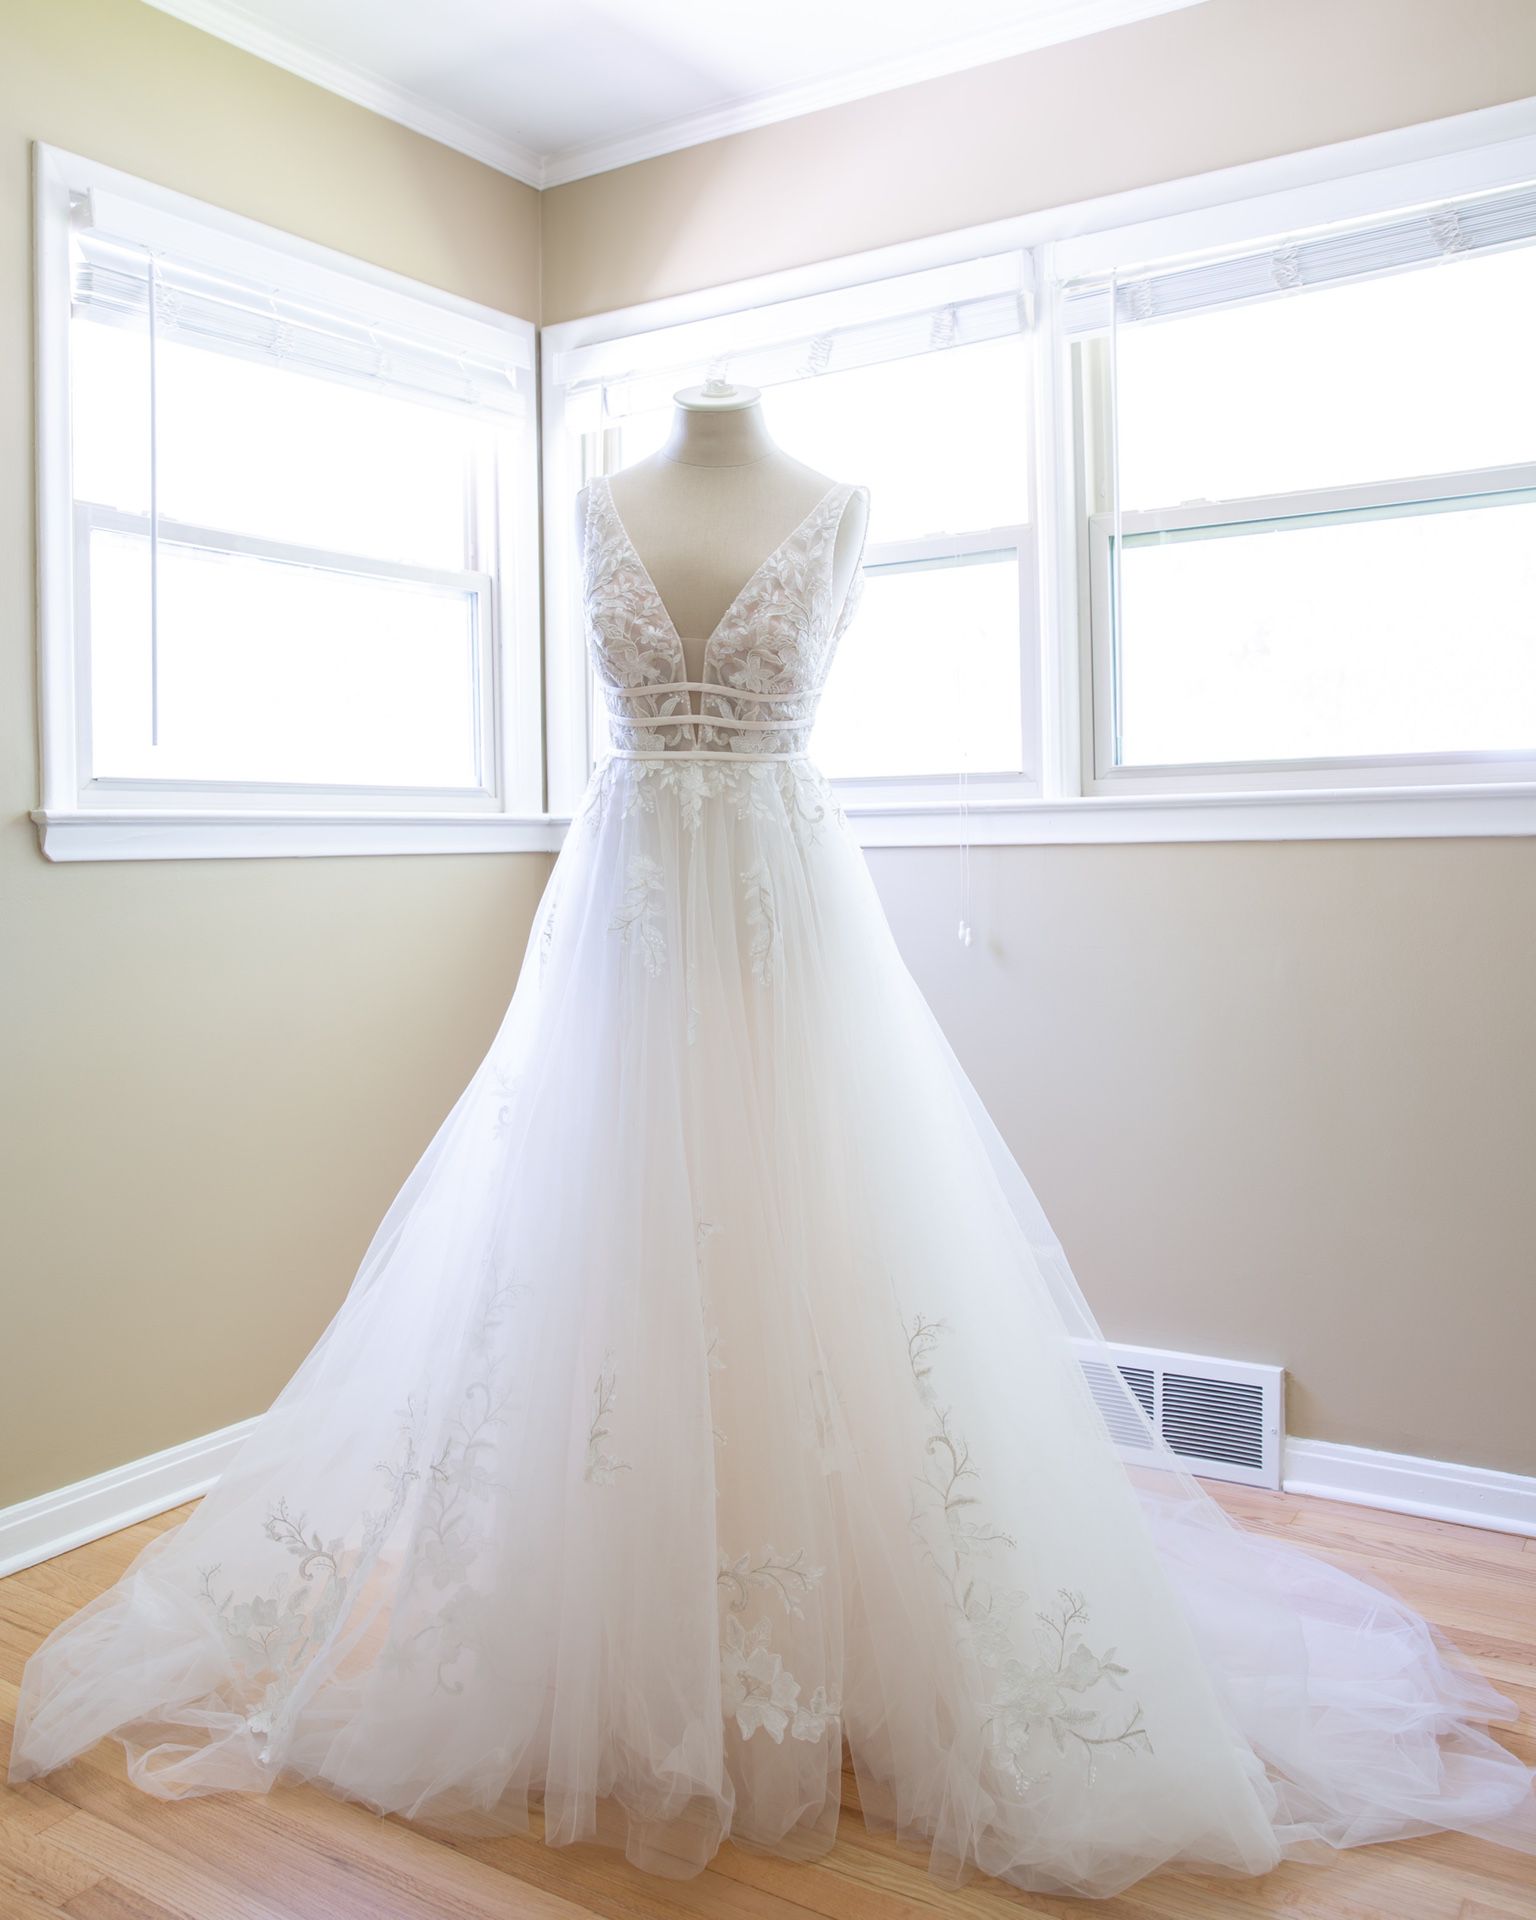 Maggie Sottero “Raelynn” Wedding Dress